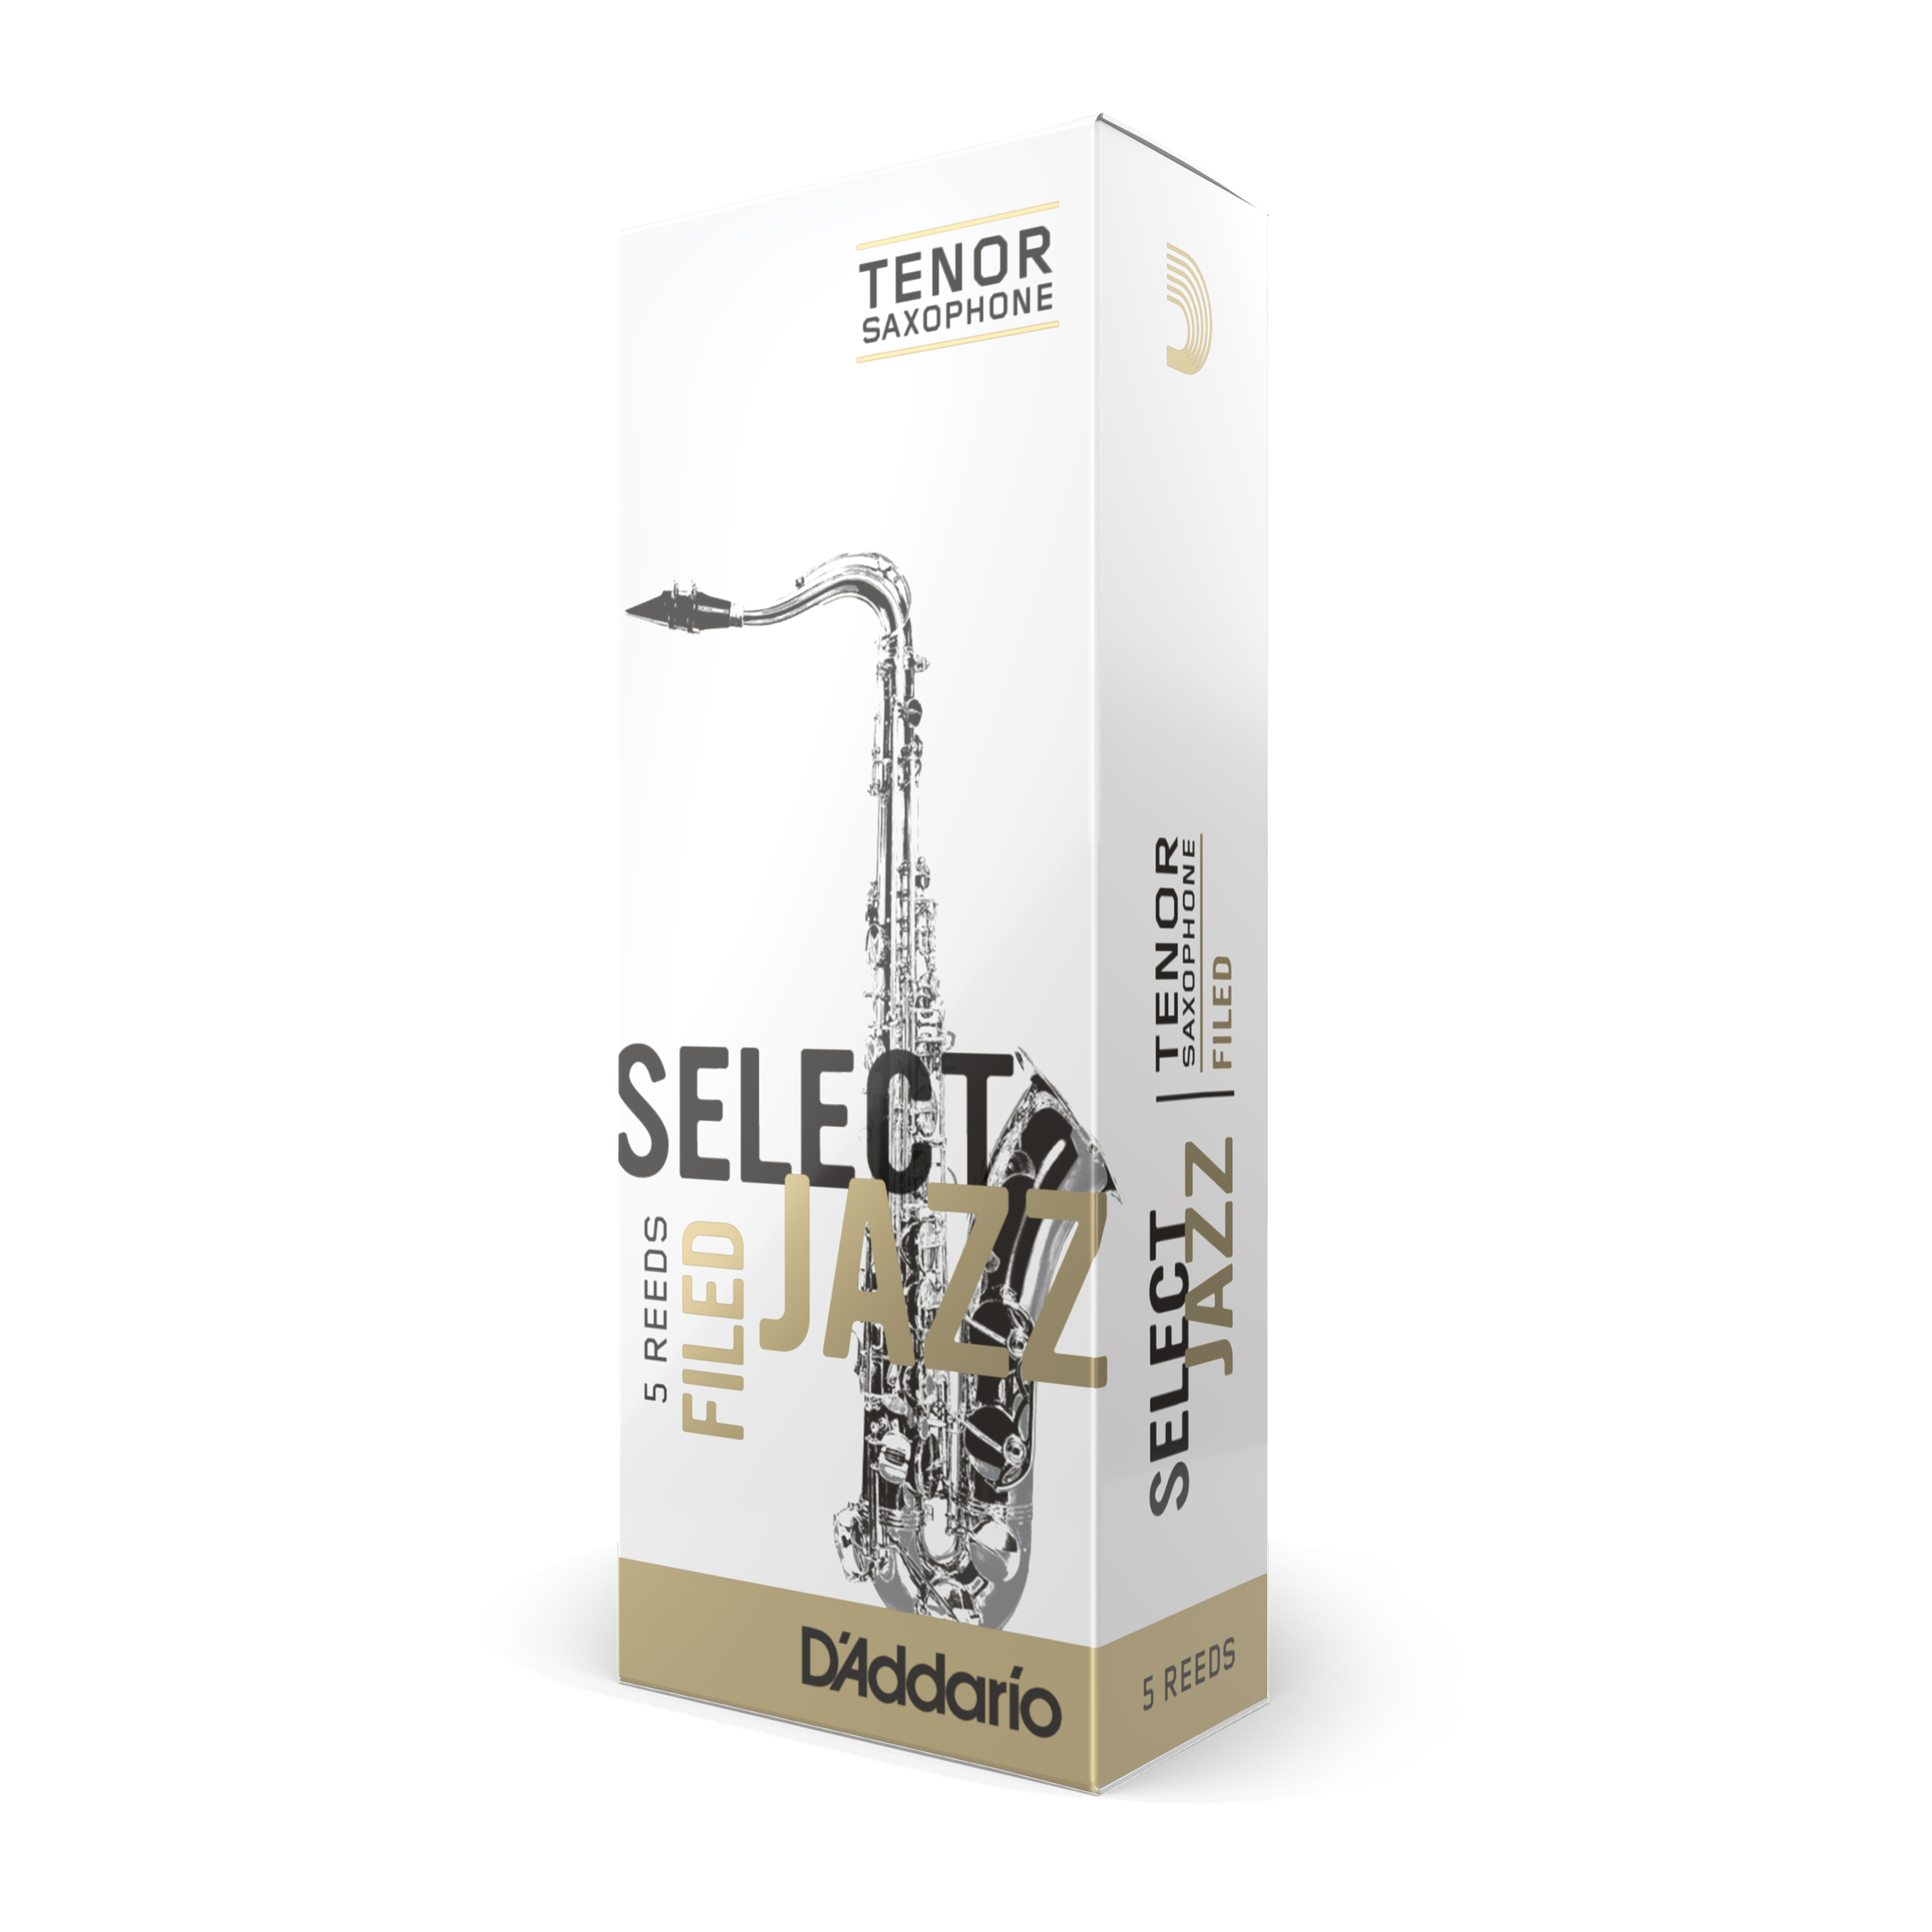 Box of five D'addario Select Jazz Filed Tenor Sax Reeds